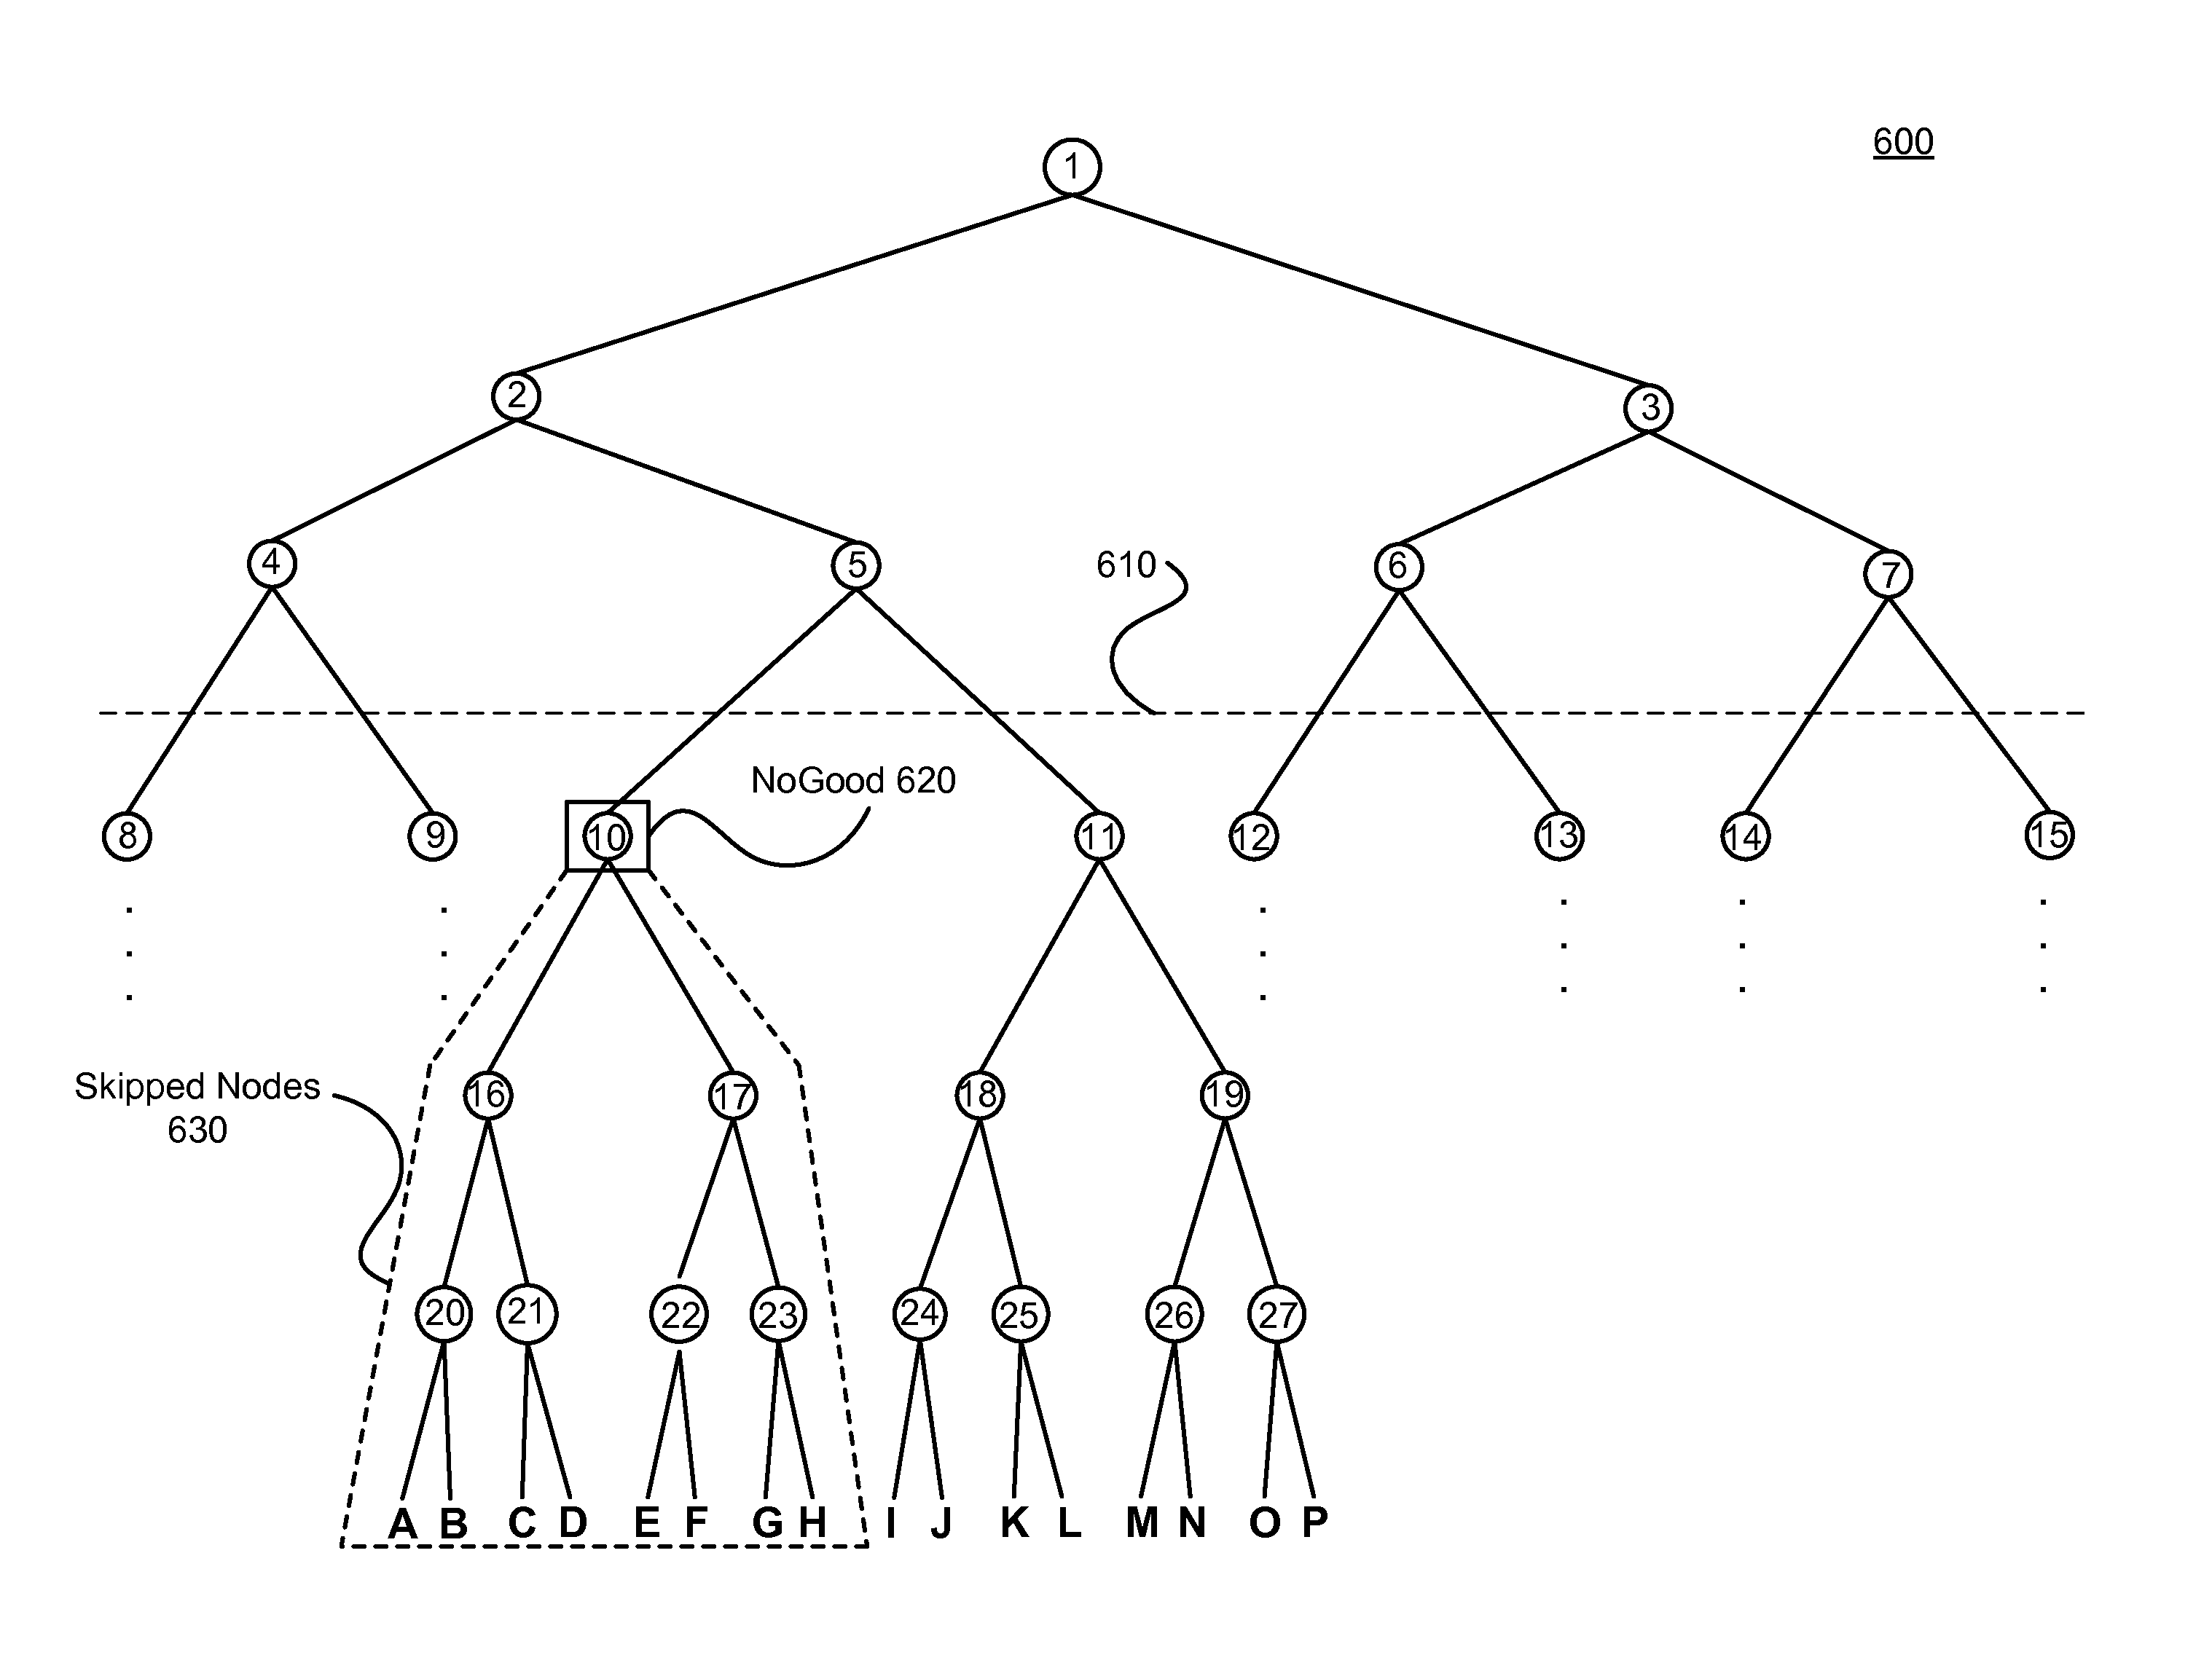 NoGood Generation Based on Search Tree Depth